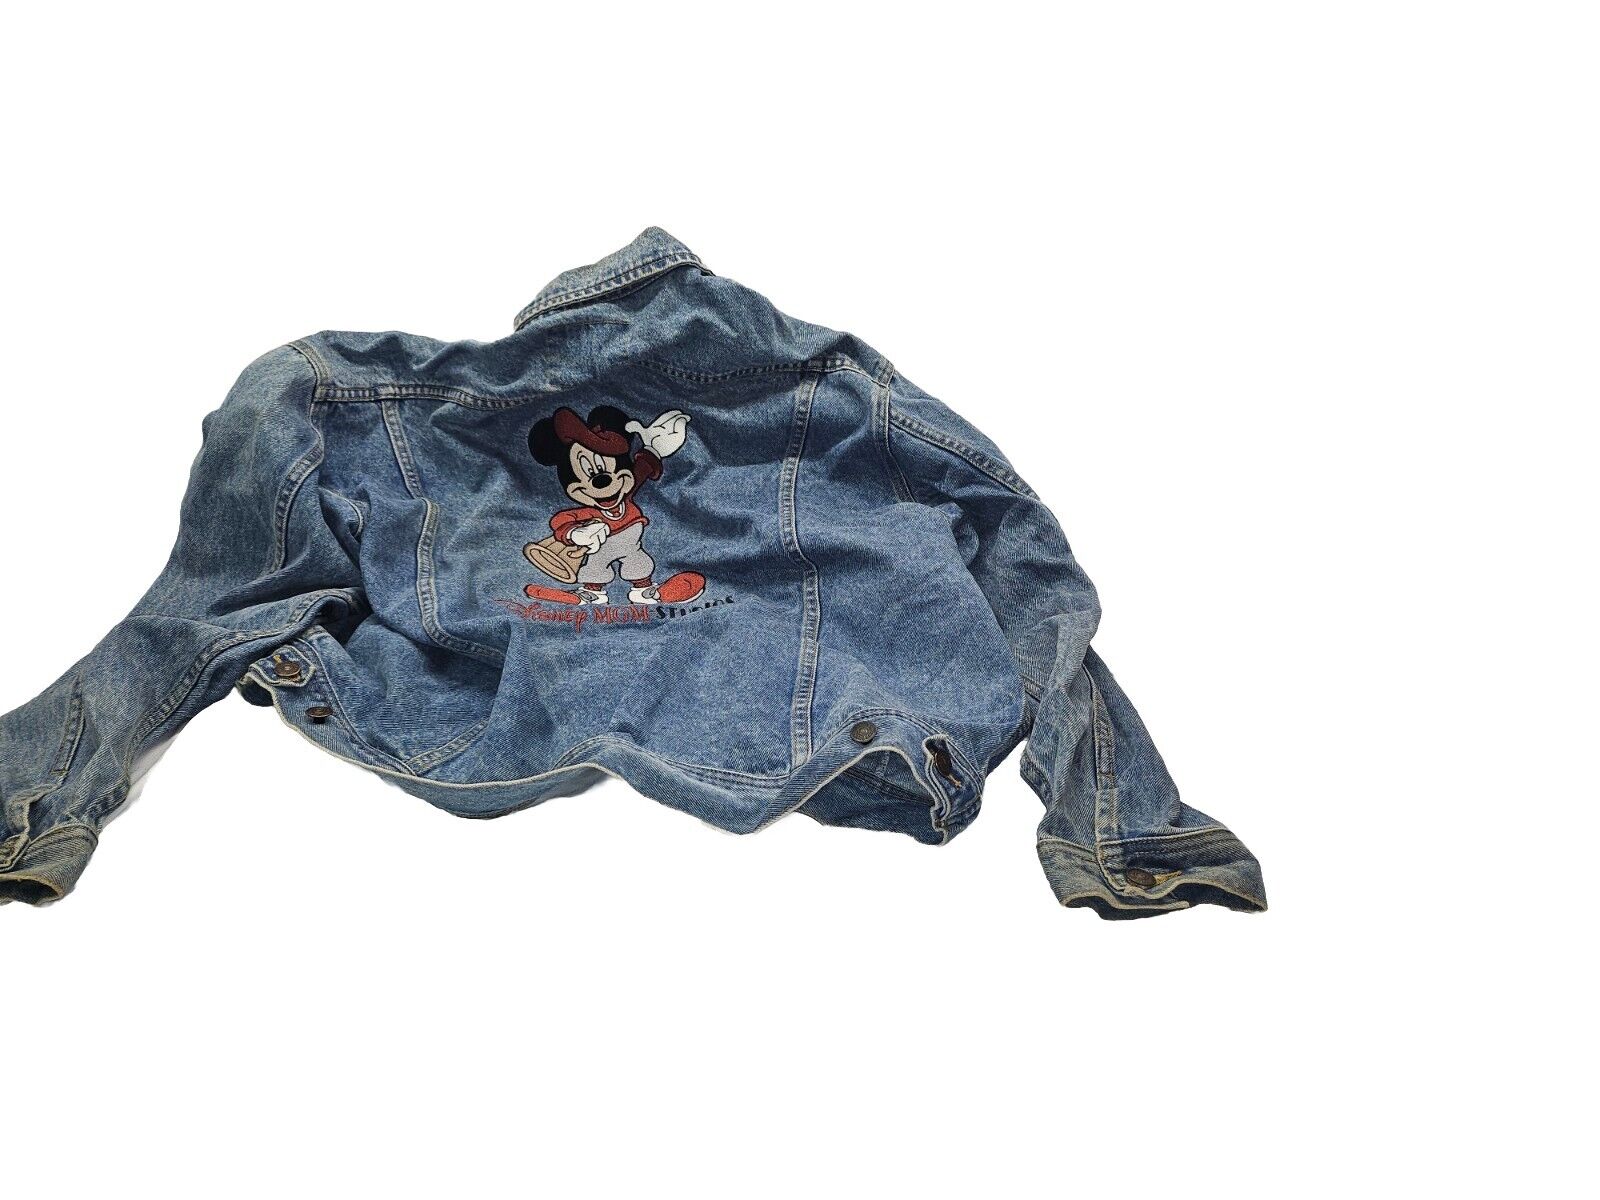  Vintage Disney MGM Studios Mickey Mouse Denim Jacket Size XL Rare